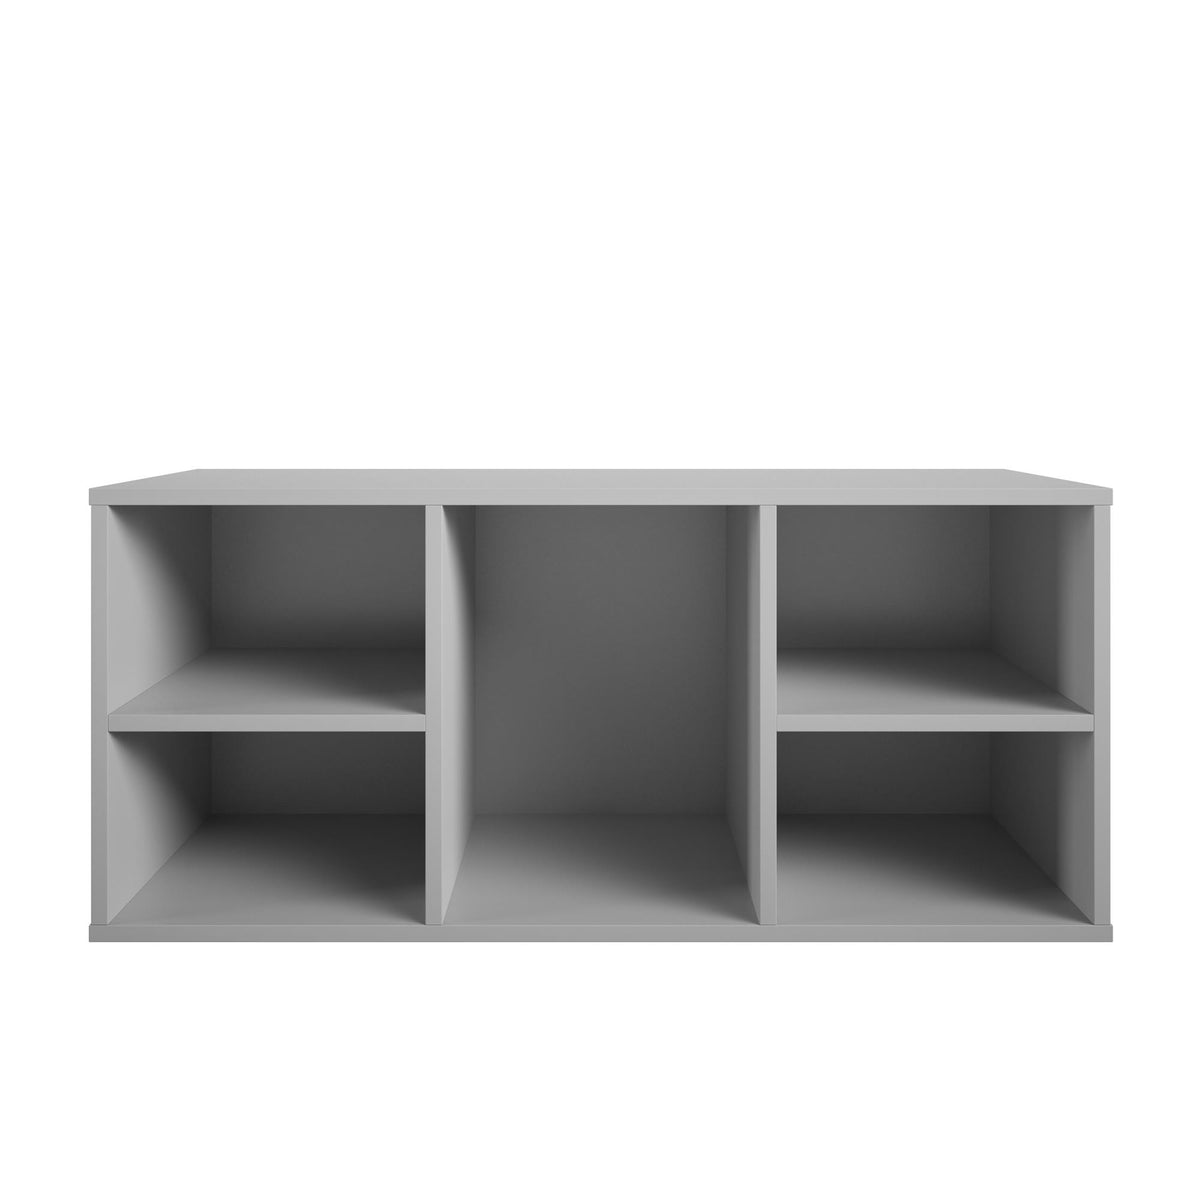 Ameriwood System Build 5-Shelf Cube Organizers